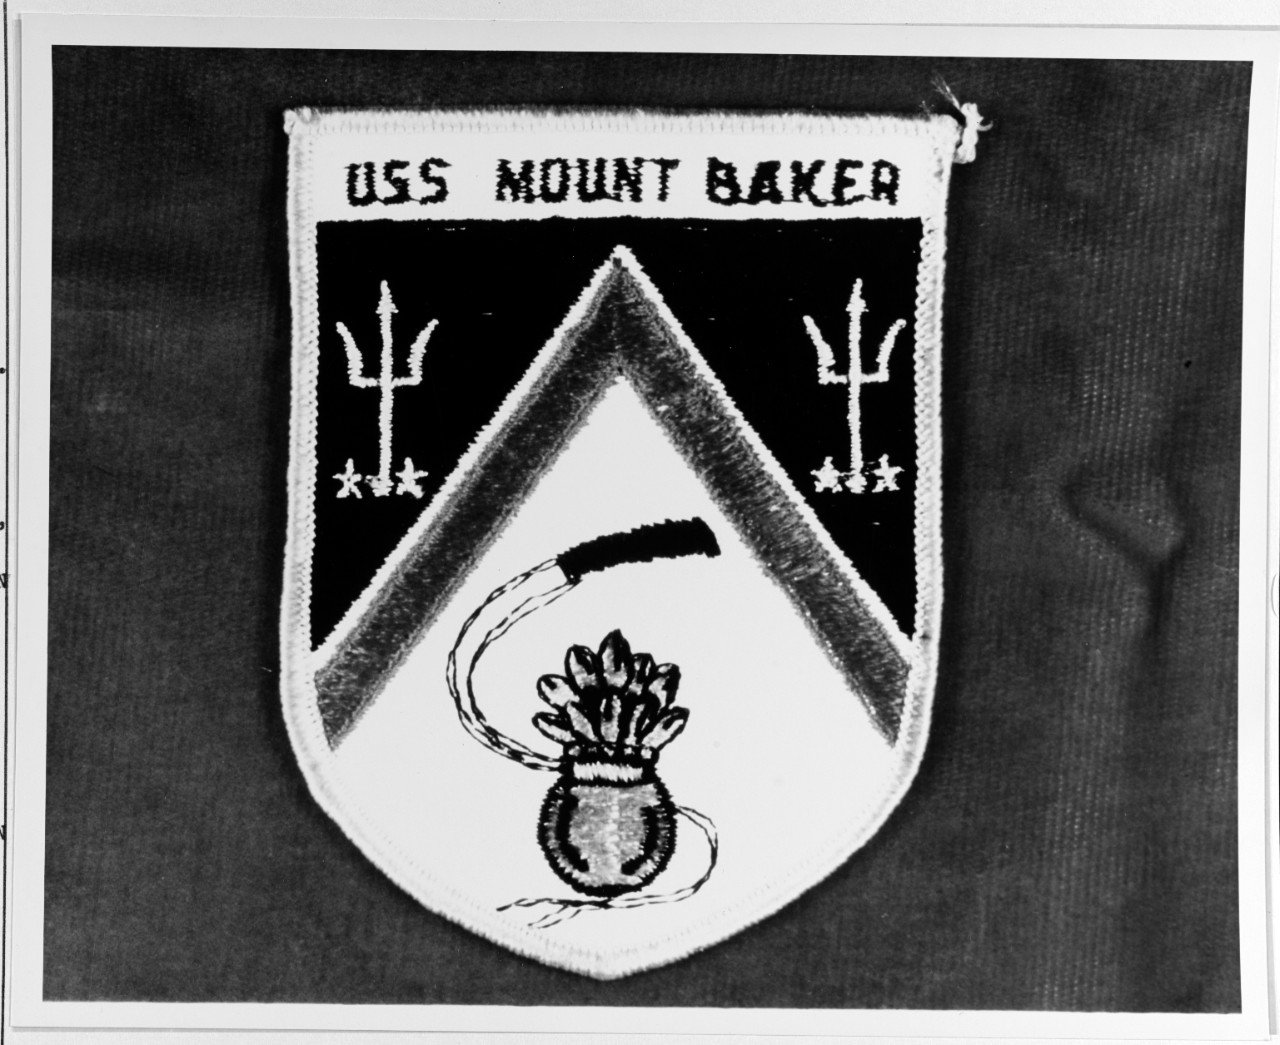 Insignia: USS MOUNT BAKER (AE-4)